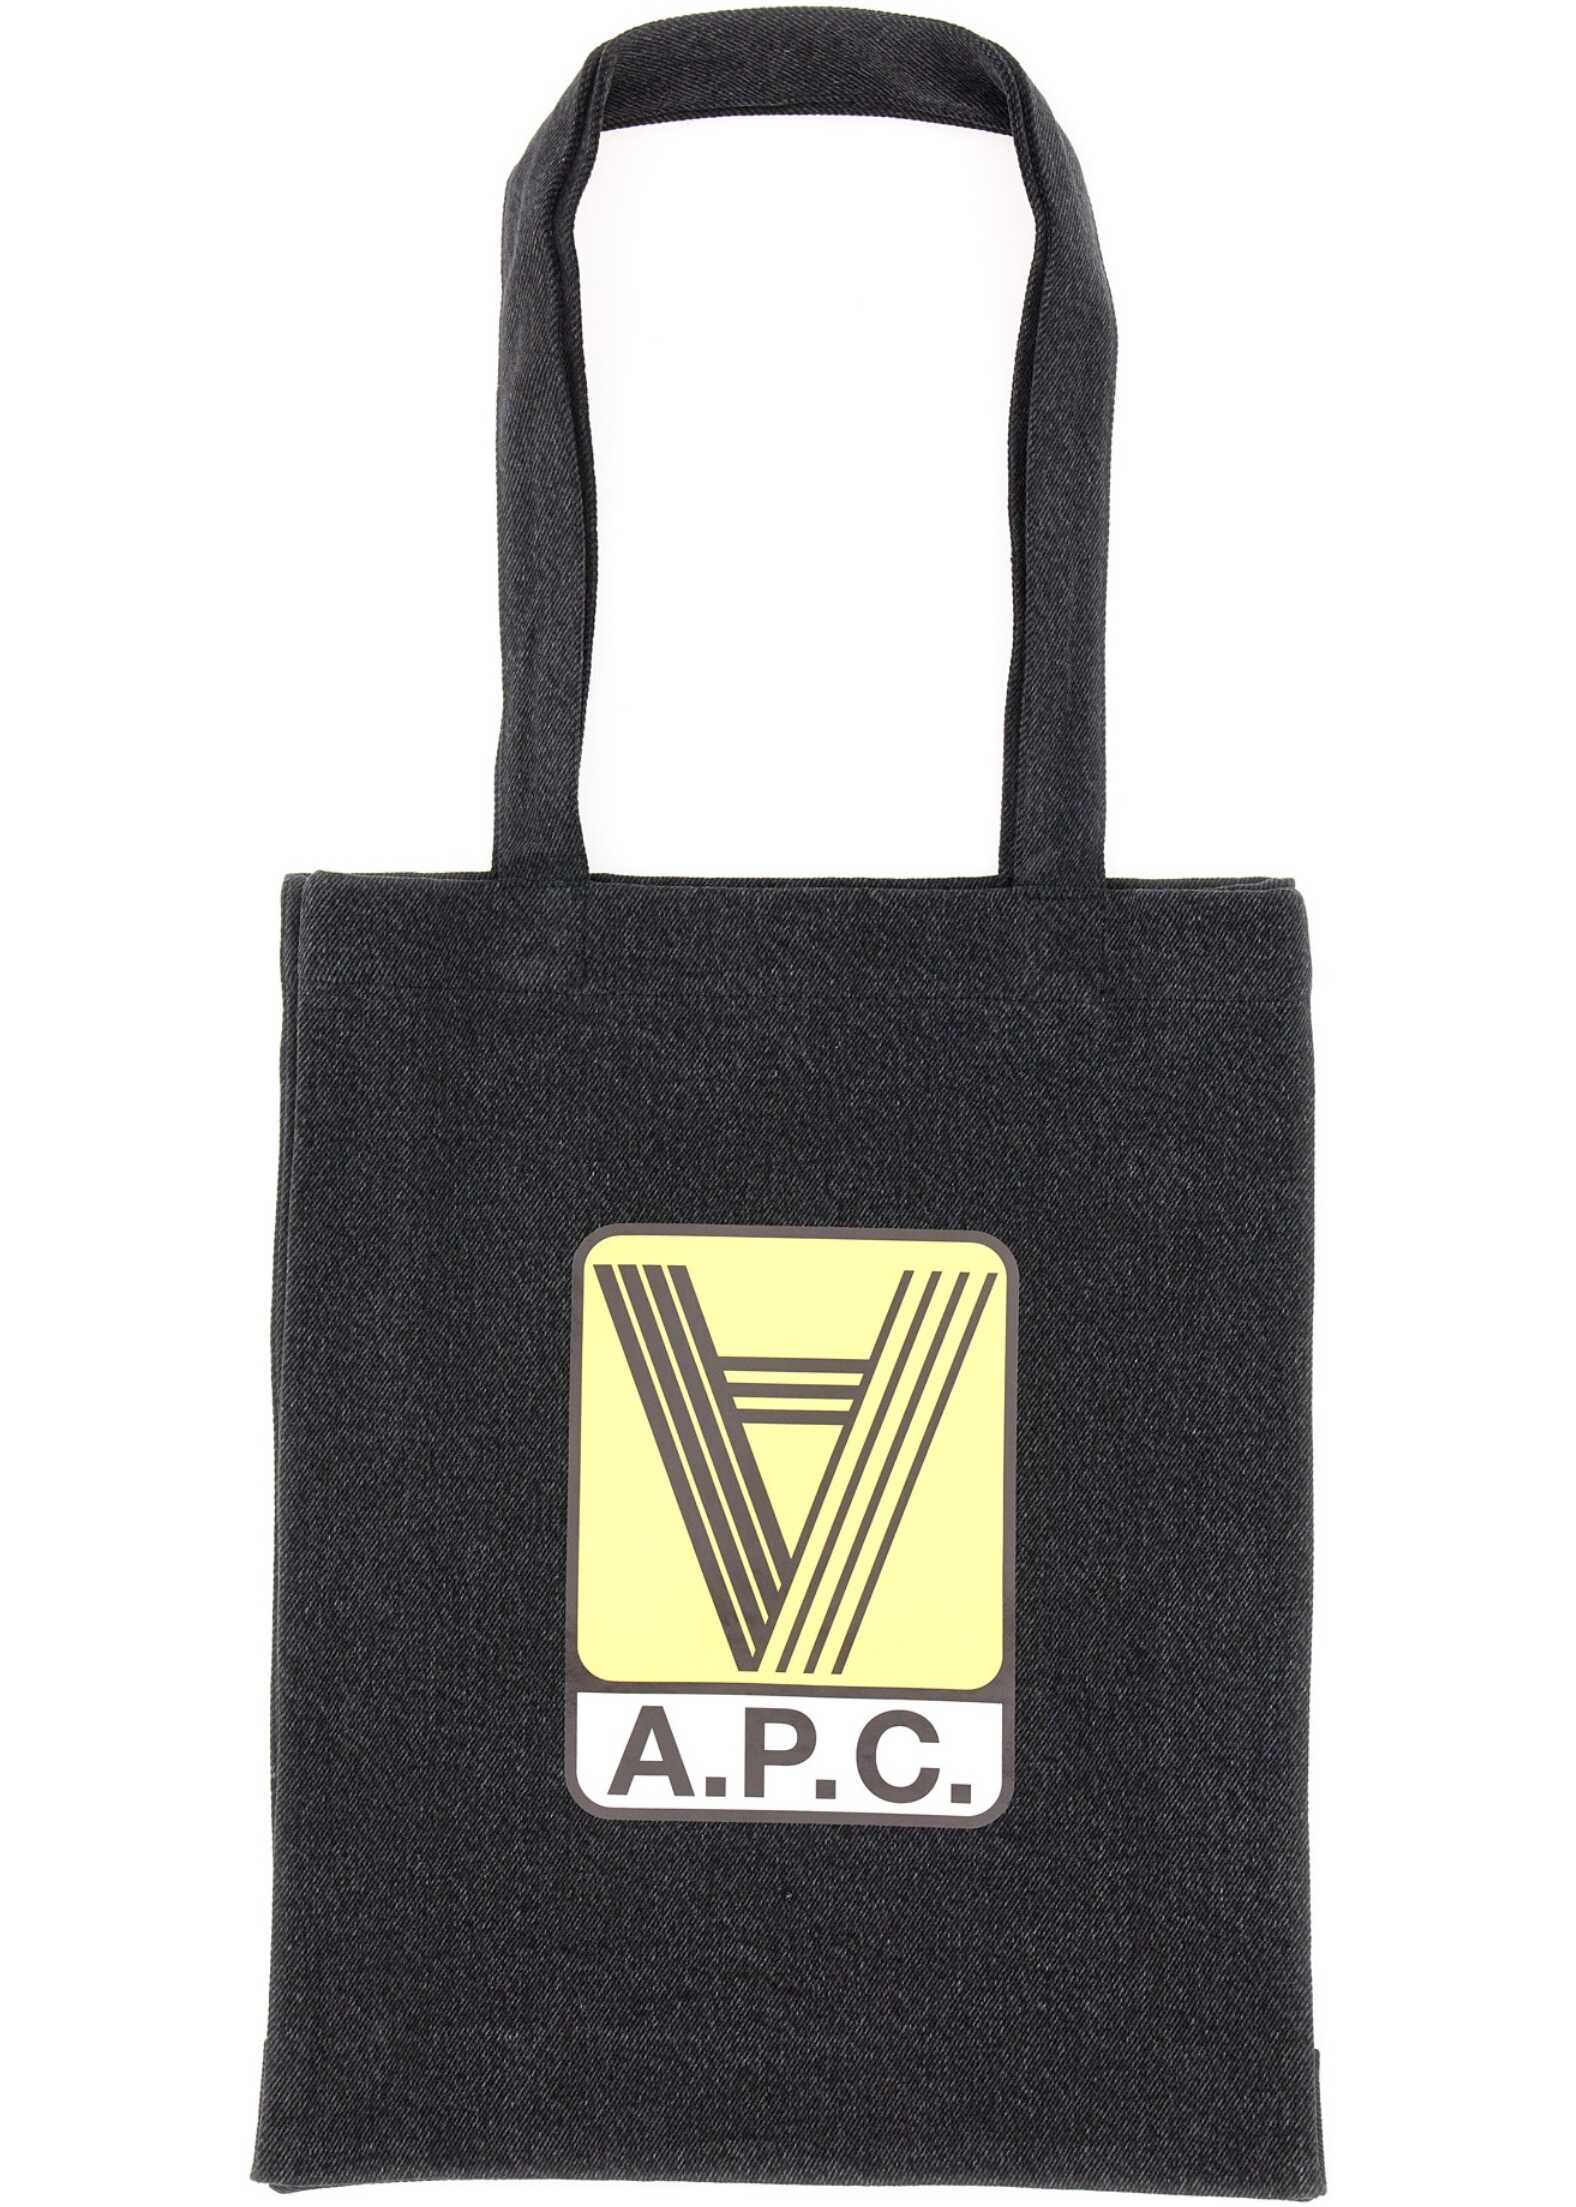 A.P.C. Tote Bag Lou BLACK